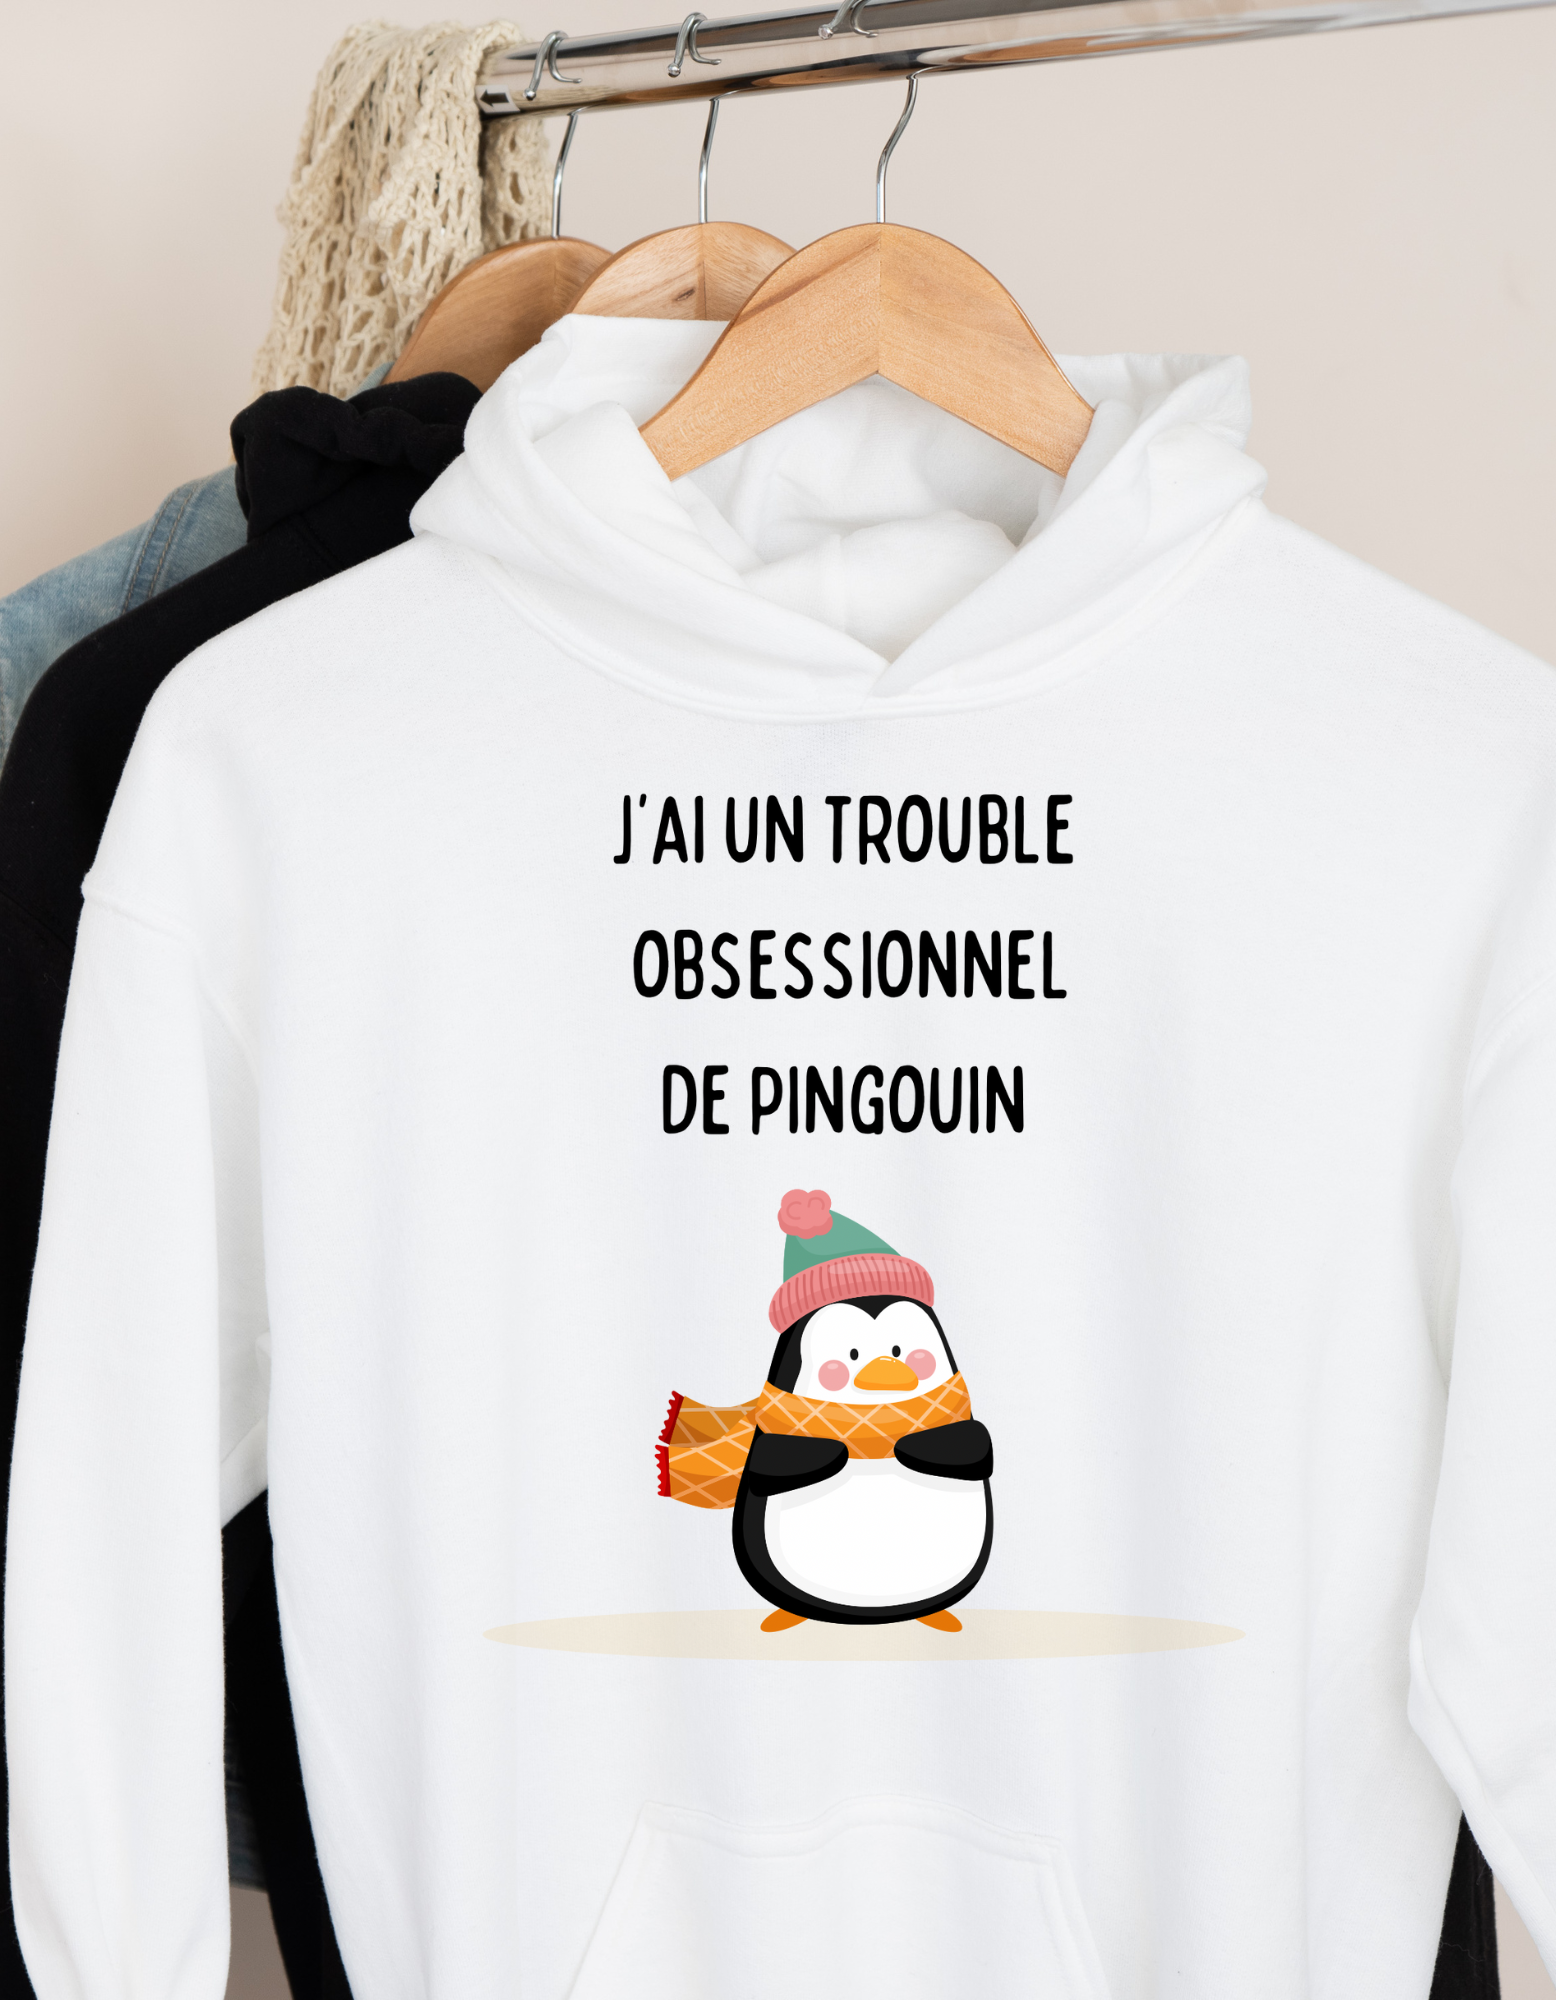 Kangourou - J'ai un trouble obsessionnel de pingouin